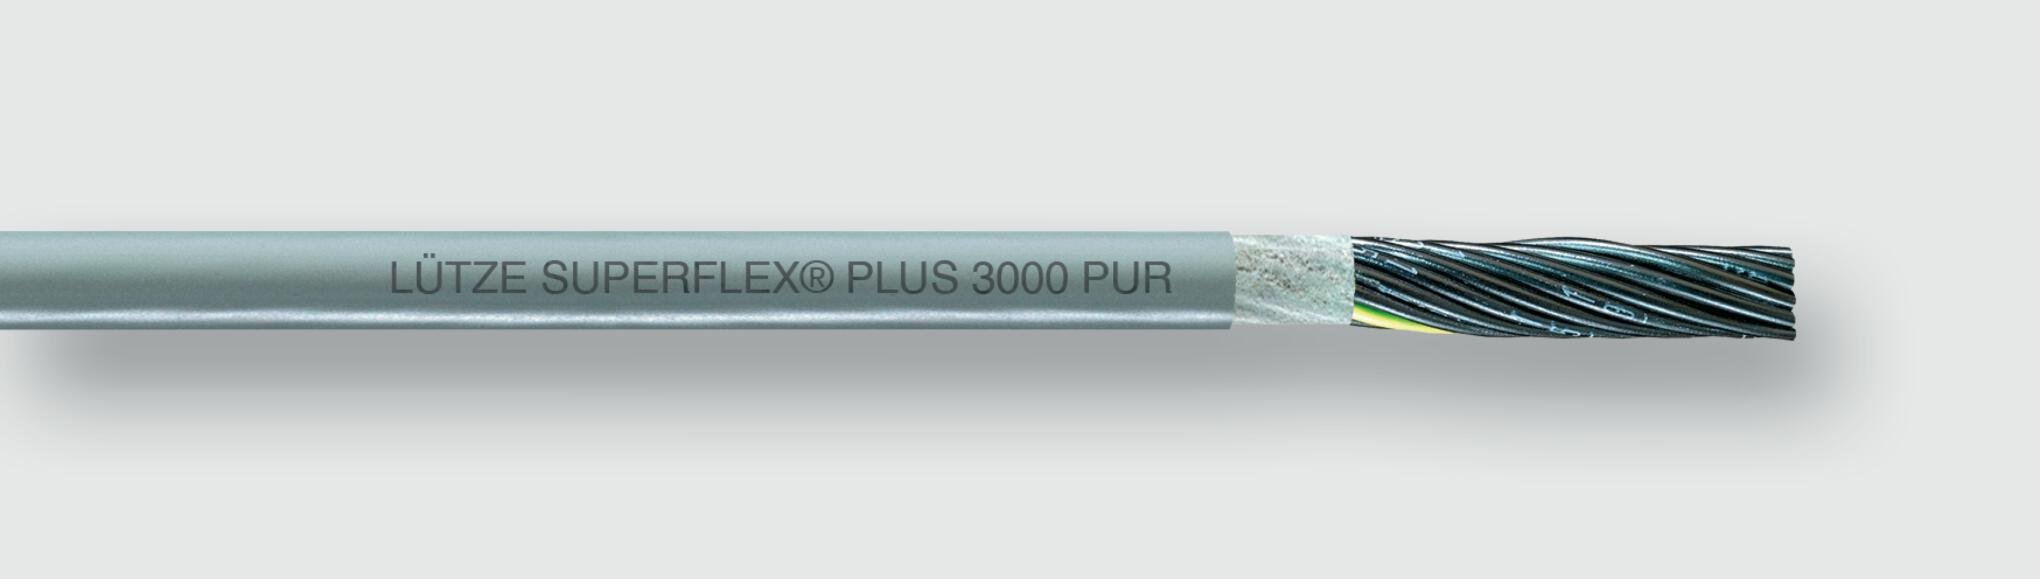 113056 - PUR control cables - C-track compatible